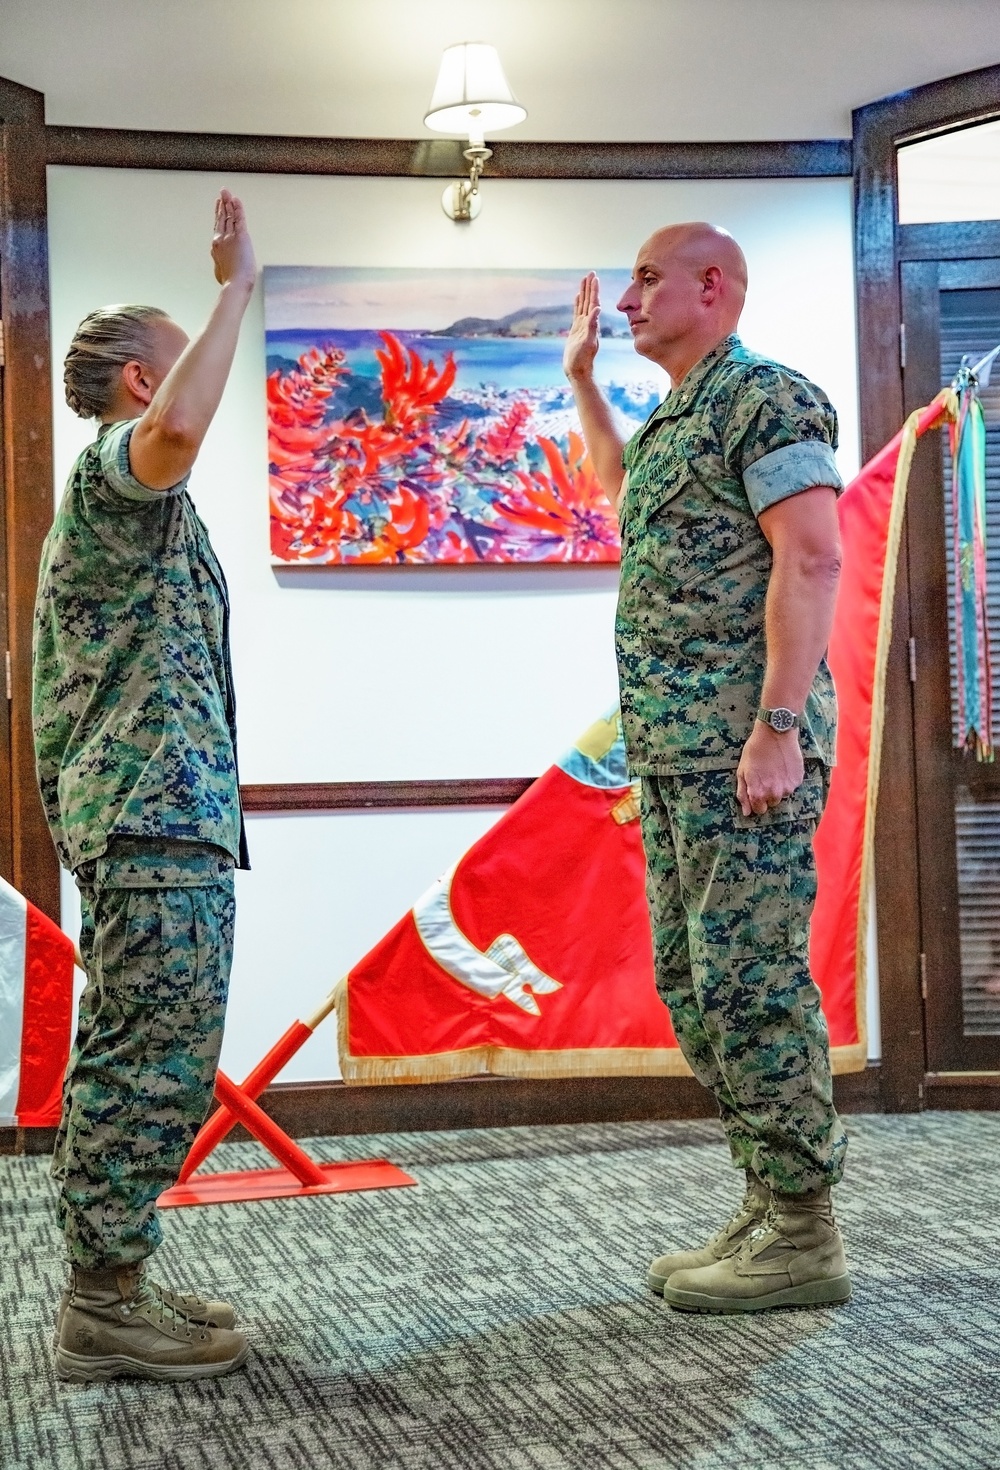 Inspirational Marine Corps family exudes sacrifice, perseverance